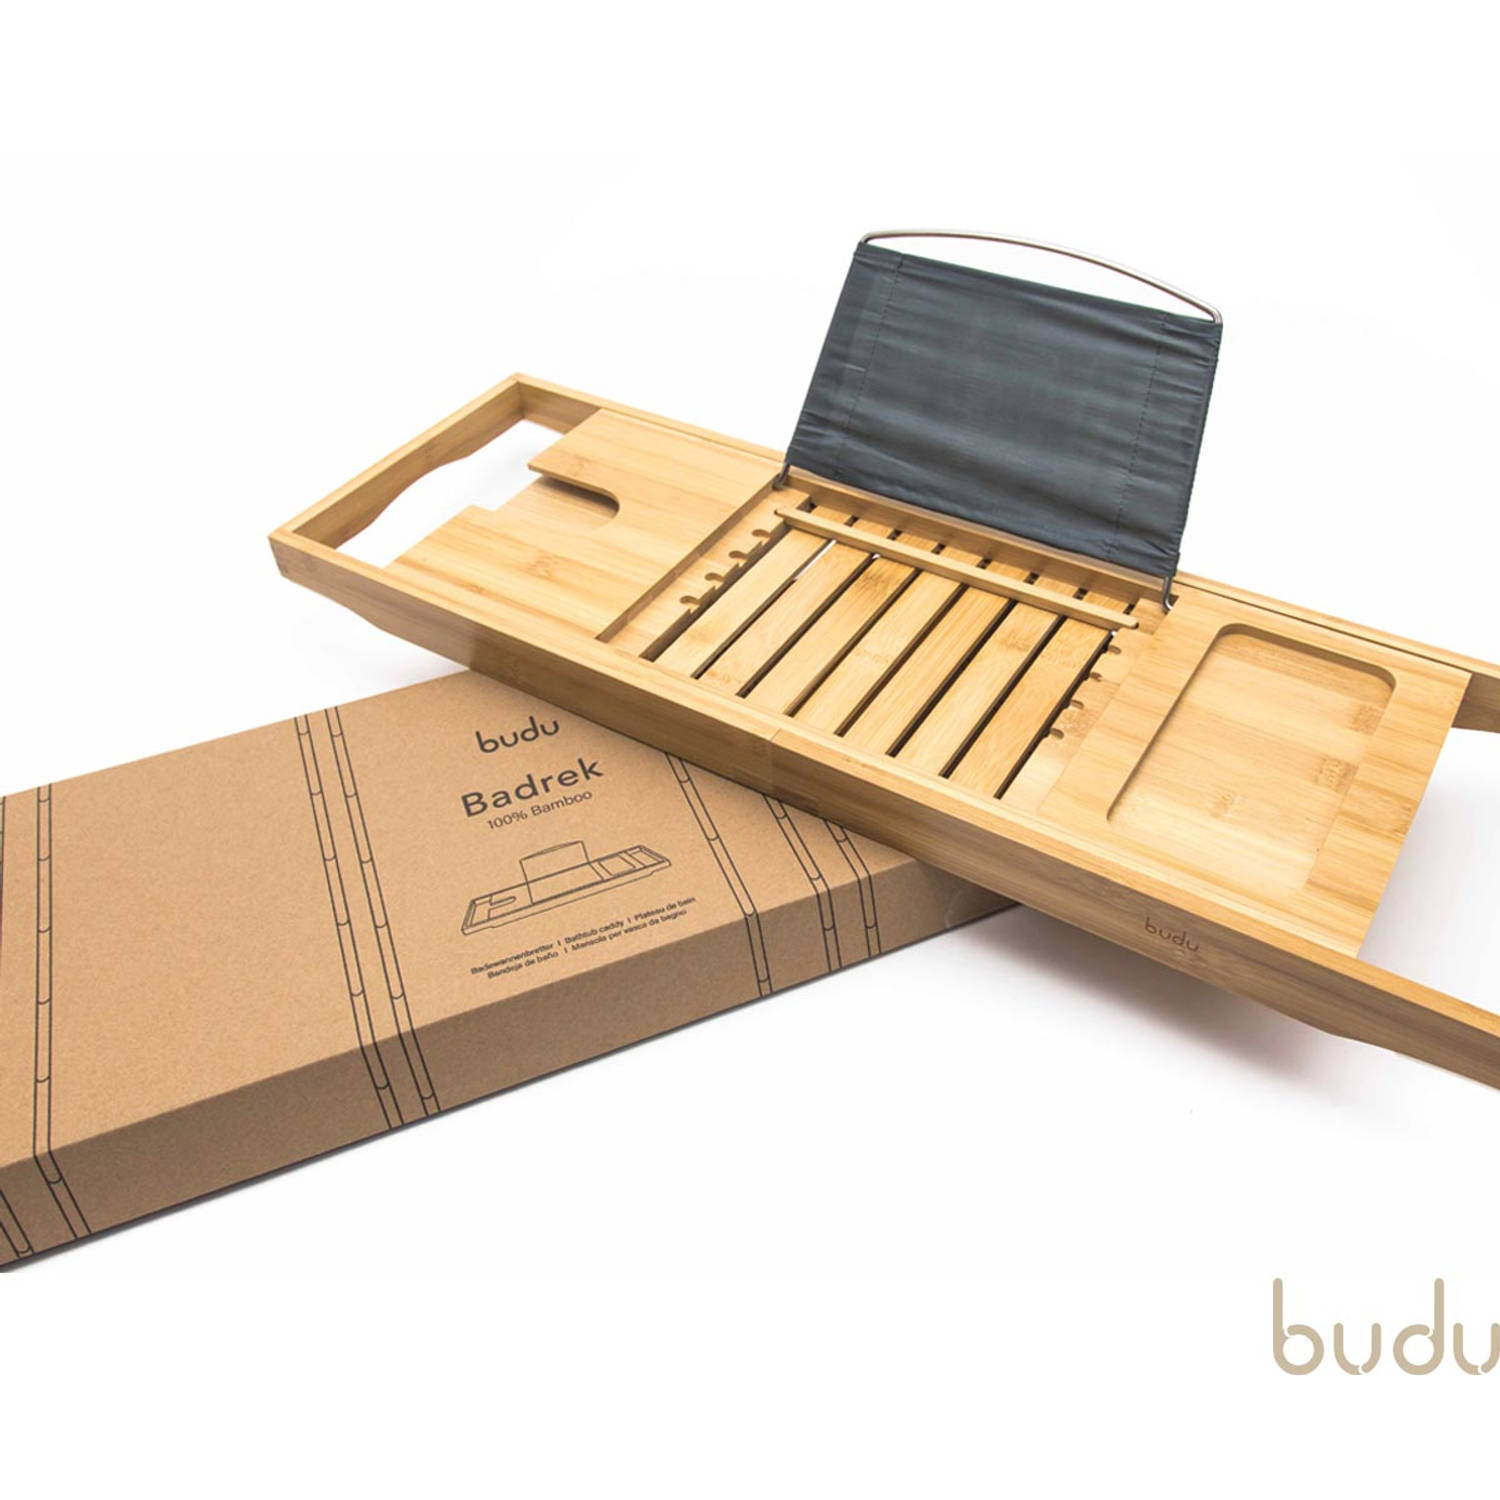 verbanning Terugbetaling kussen Budu Badplank Bamboe - Badplank voor in bad - Verstelbaar badrek - Houten  badplank - Badrekje - Badplank hout | Blokker